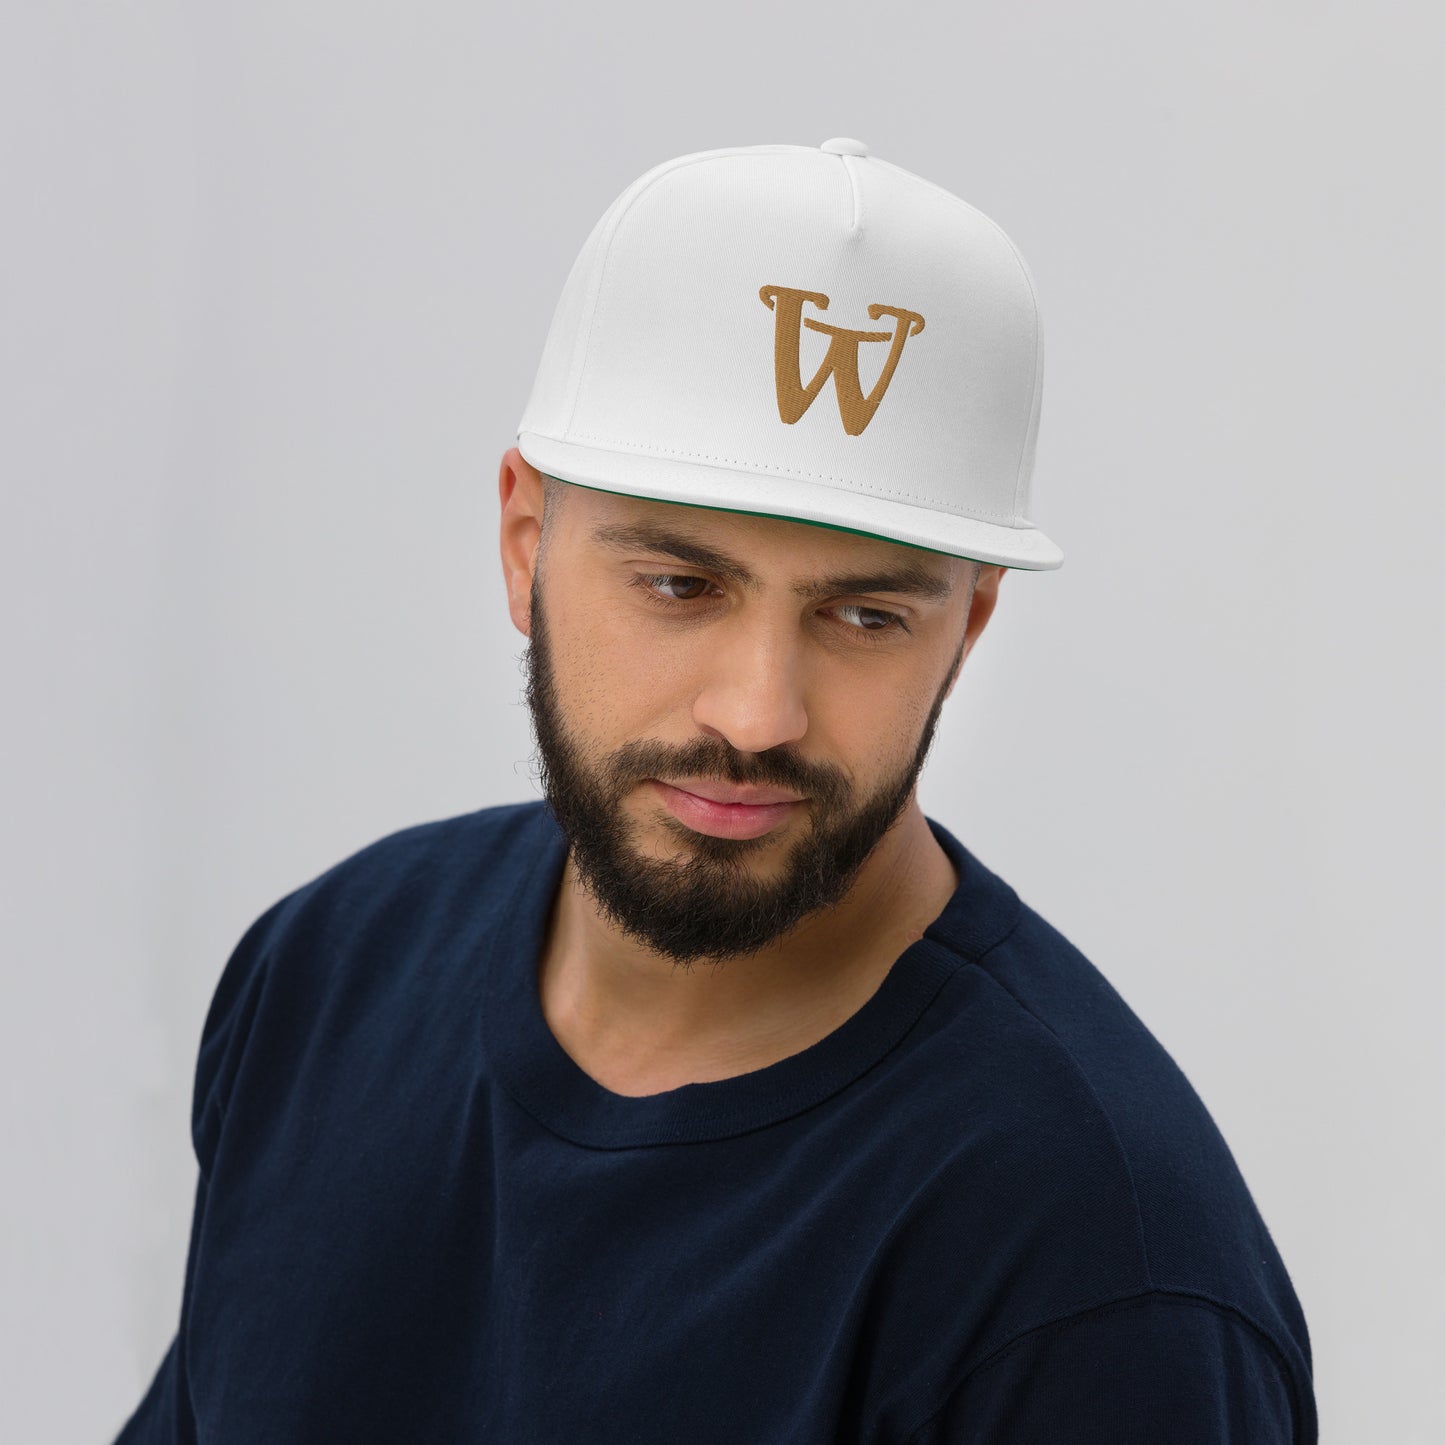 "W" snapback cap